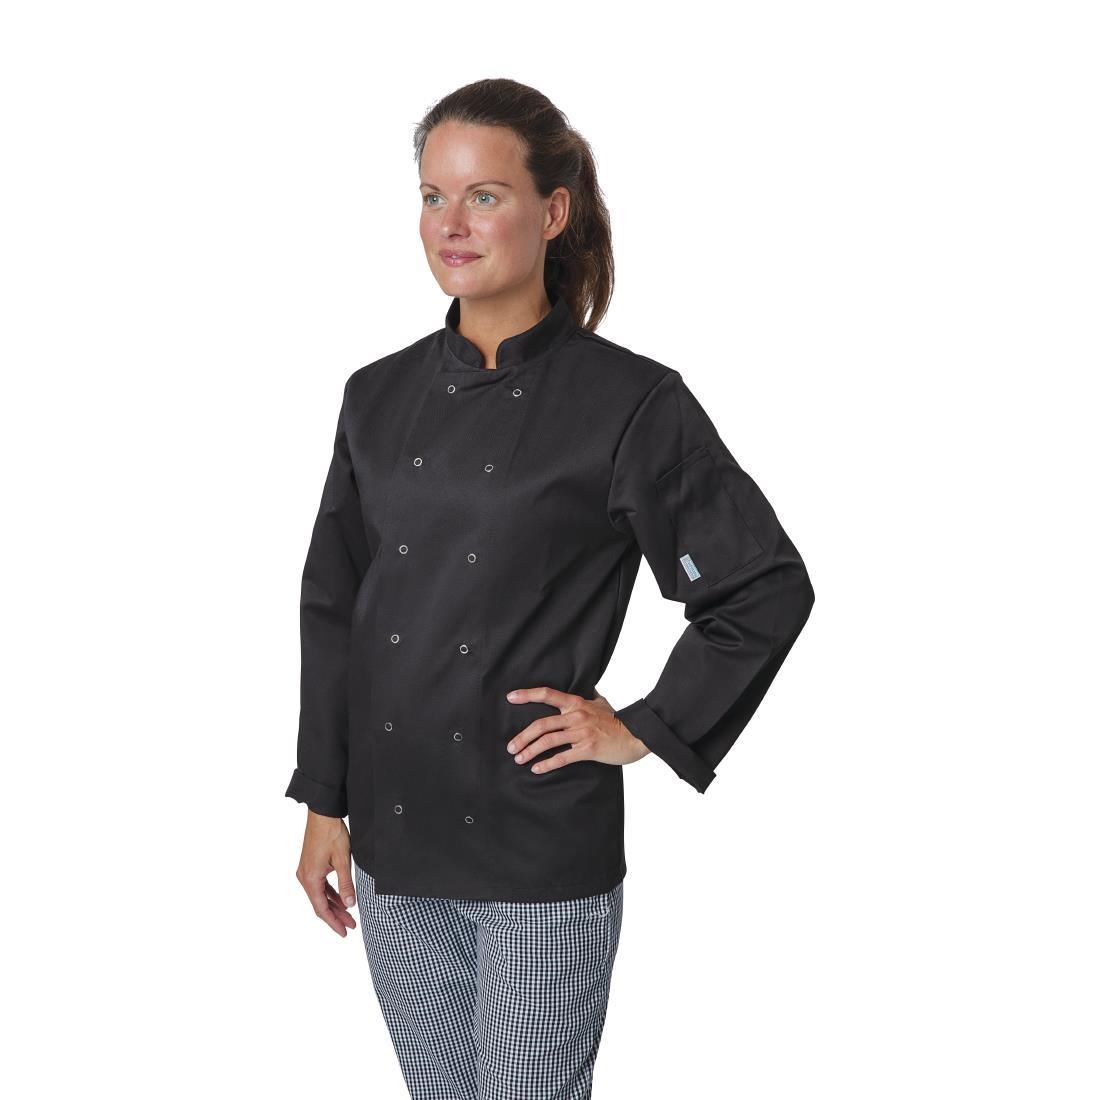 Whites Vegas Unisex Chefs Jacket Long Sleeve Black S - A438-S  - 2